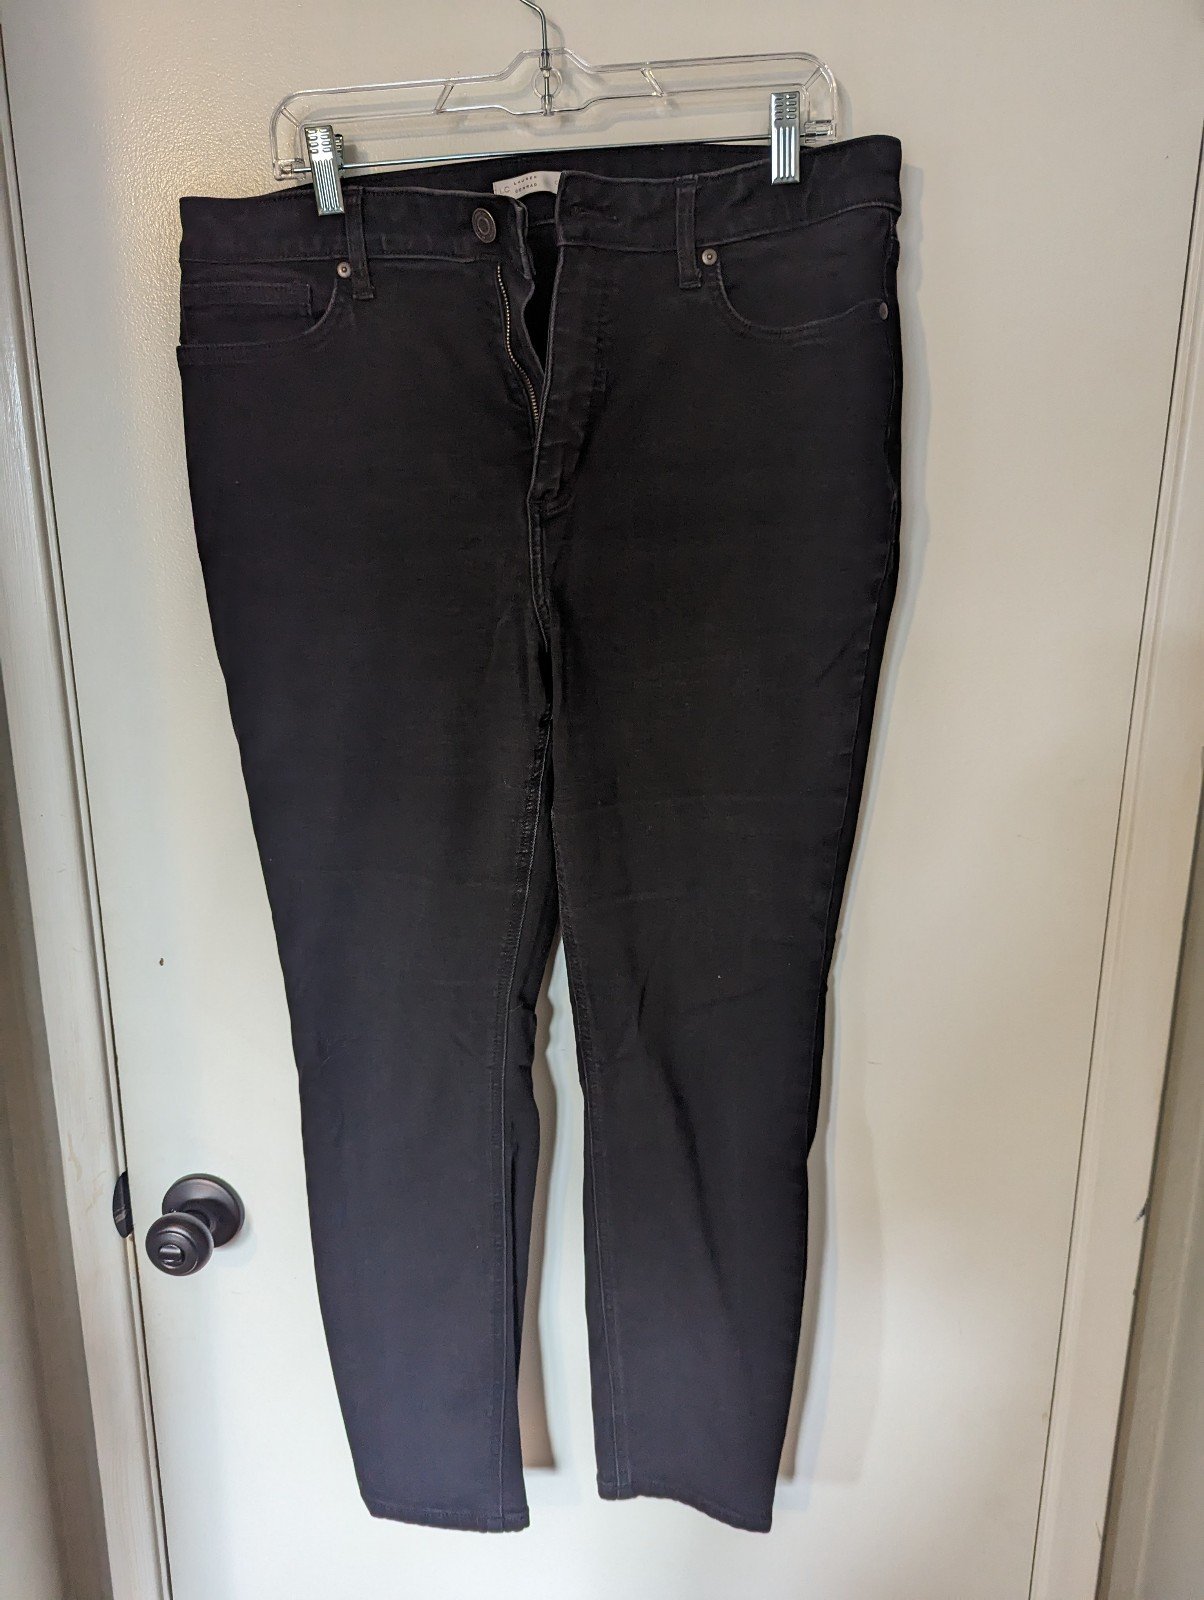 Elegant lauren conrad skinny jeans 16 H5stuHVgh Wholesa